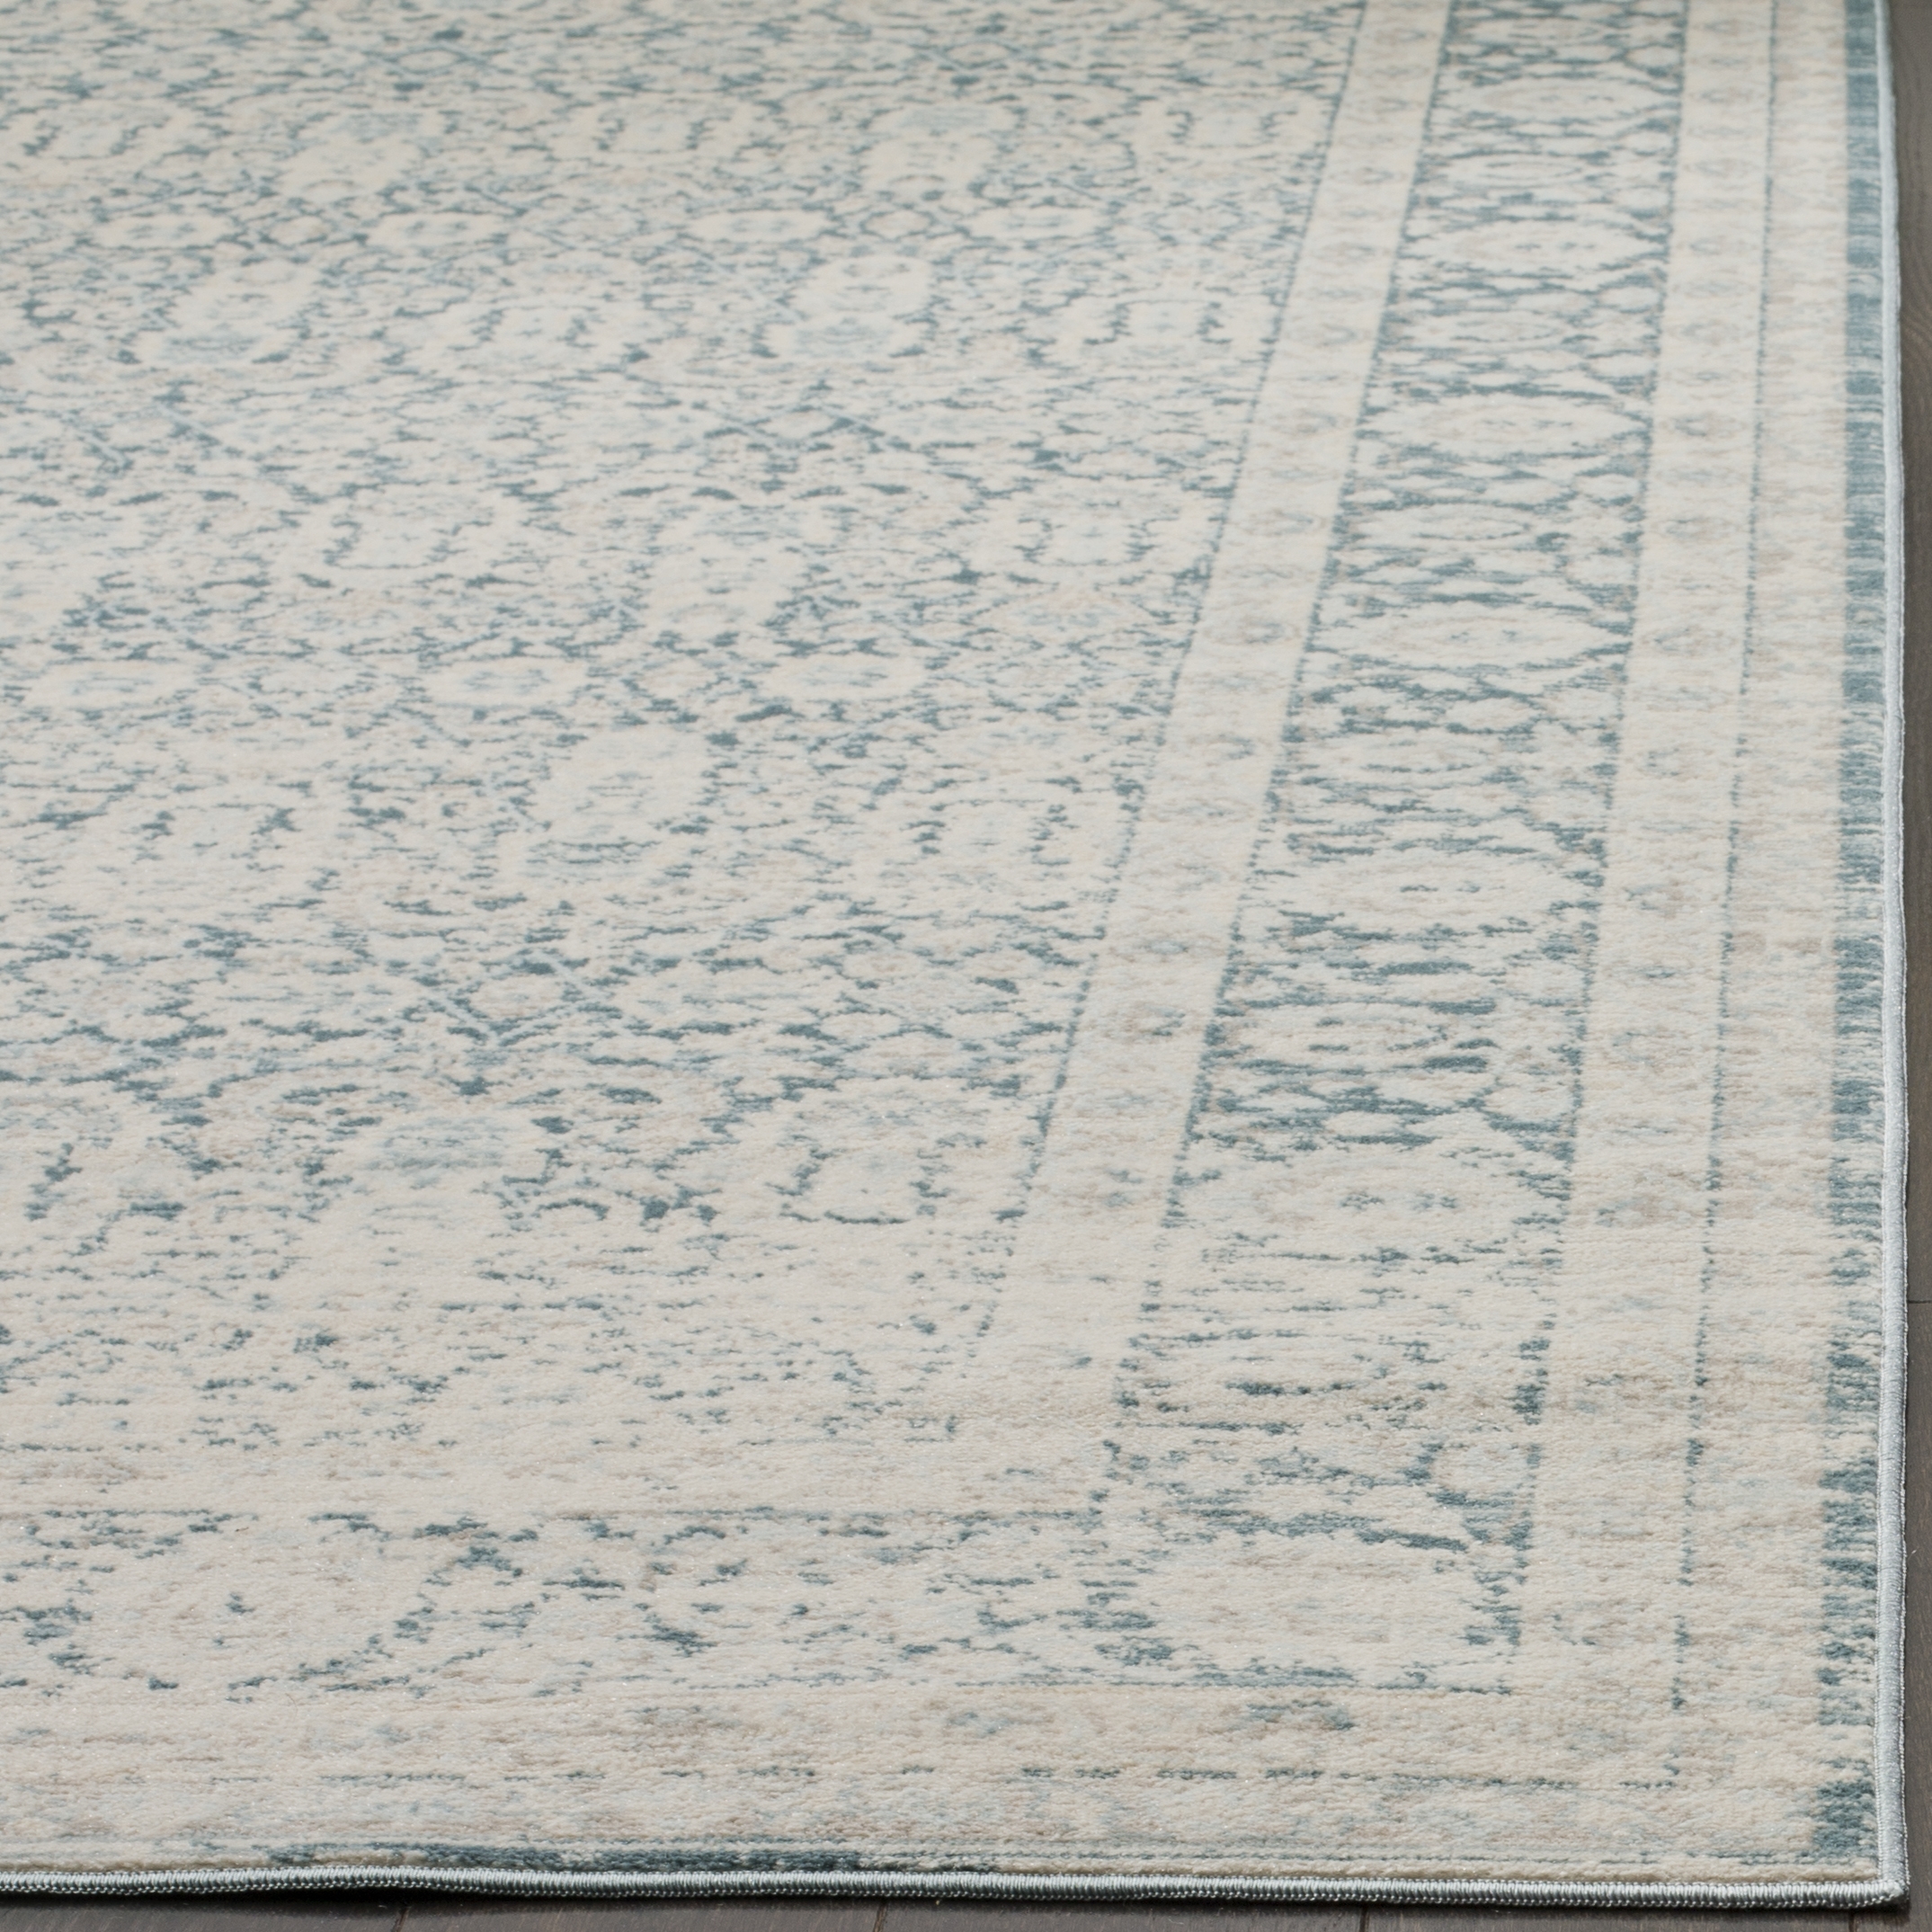 Arlo Home Woven Area Rug, ARC674B, Blue/Grey,  8' X 10' - Image 2